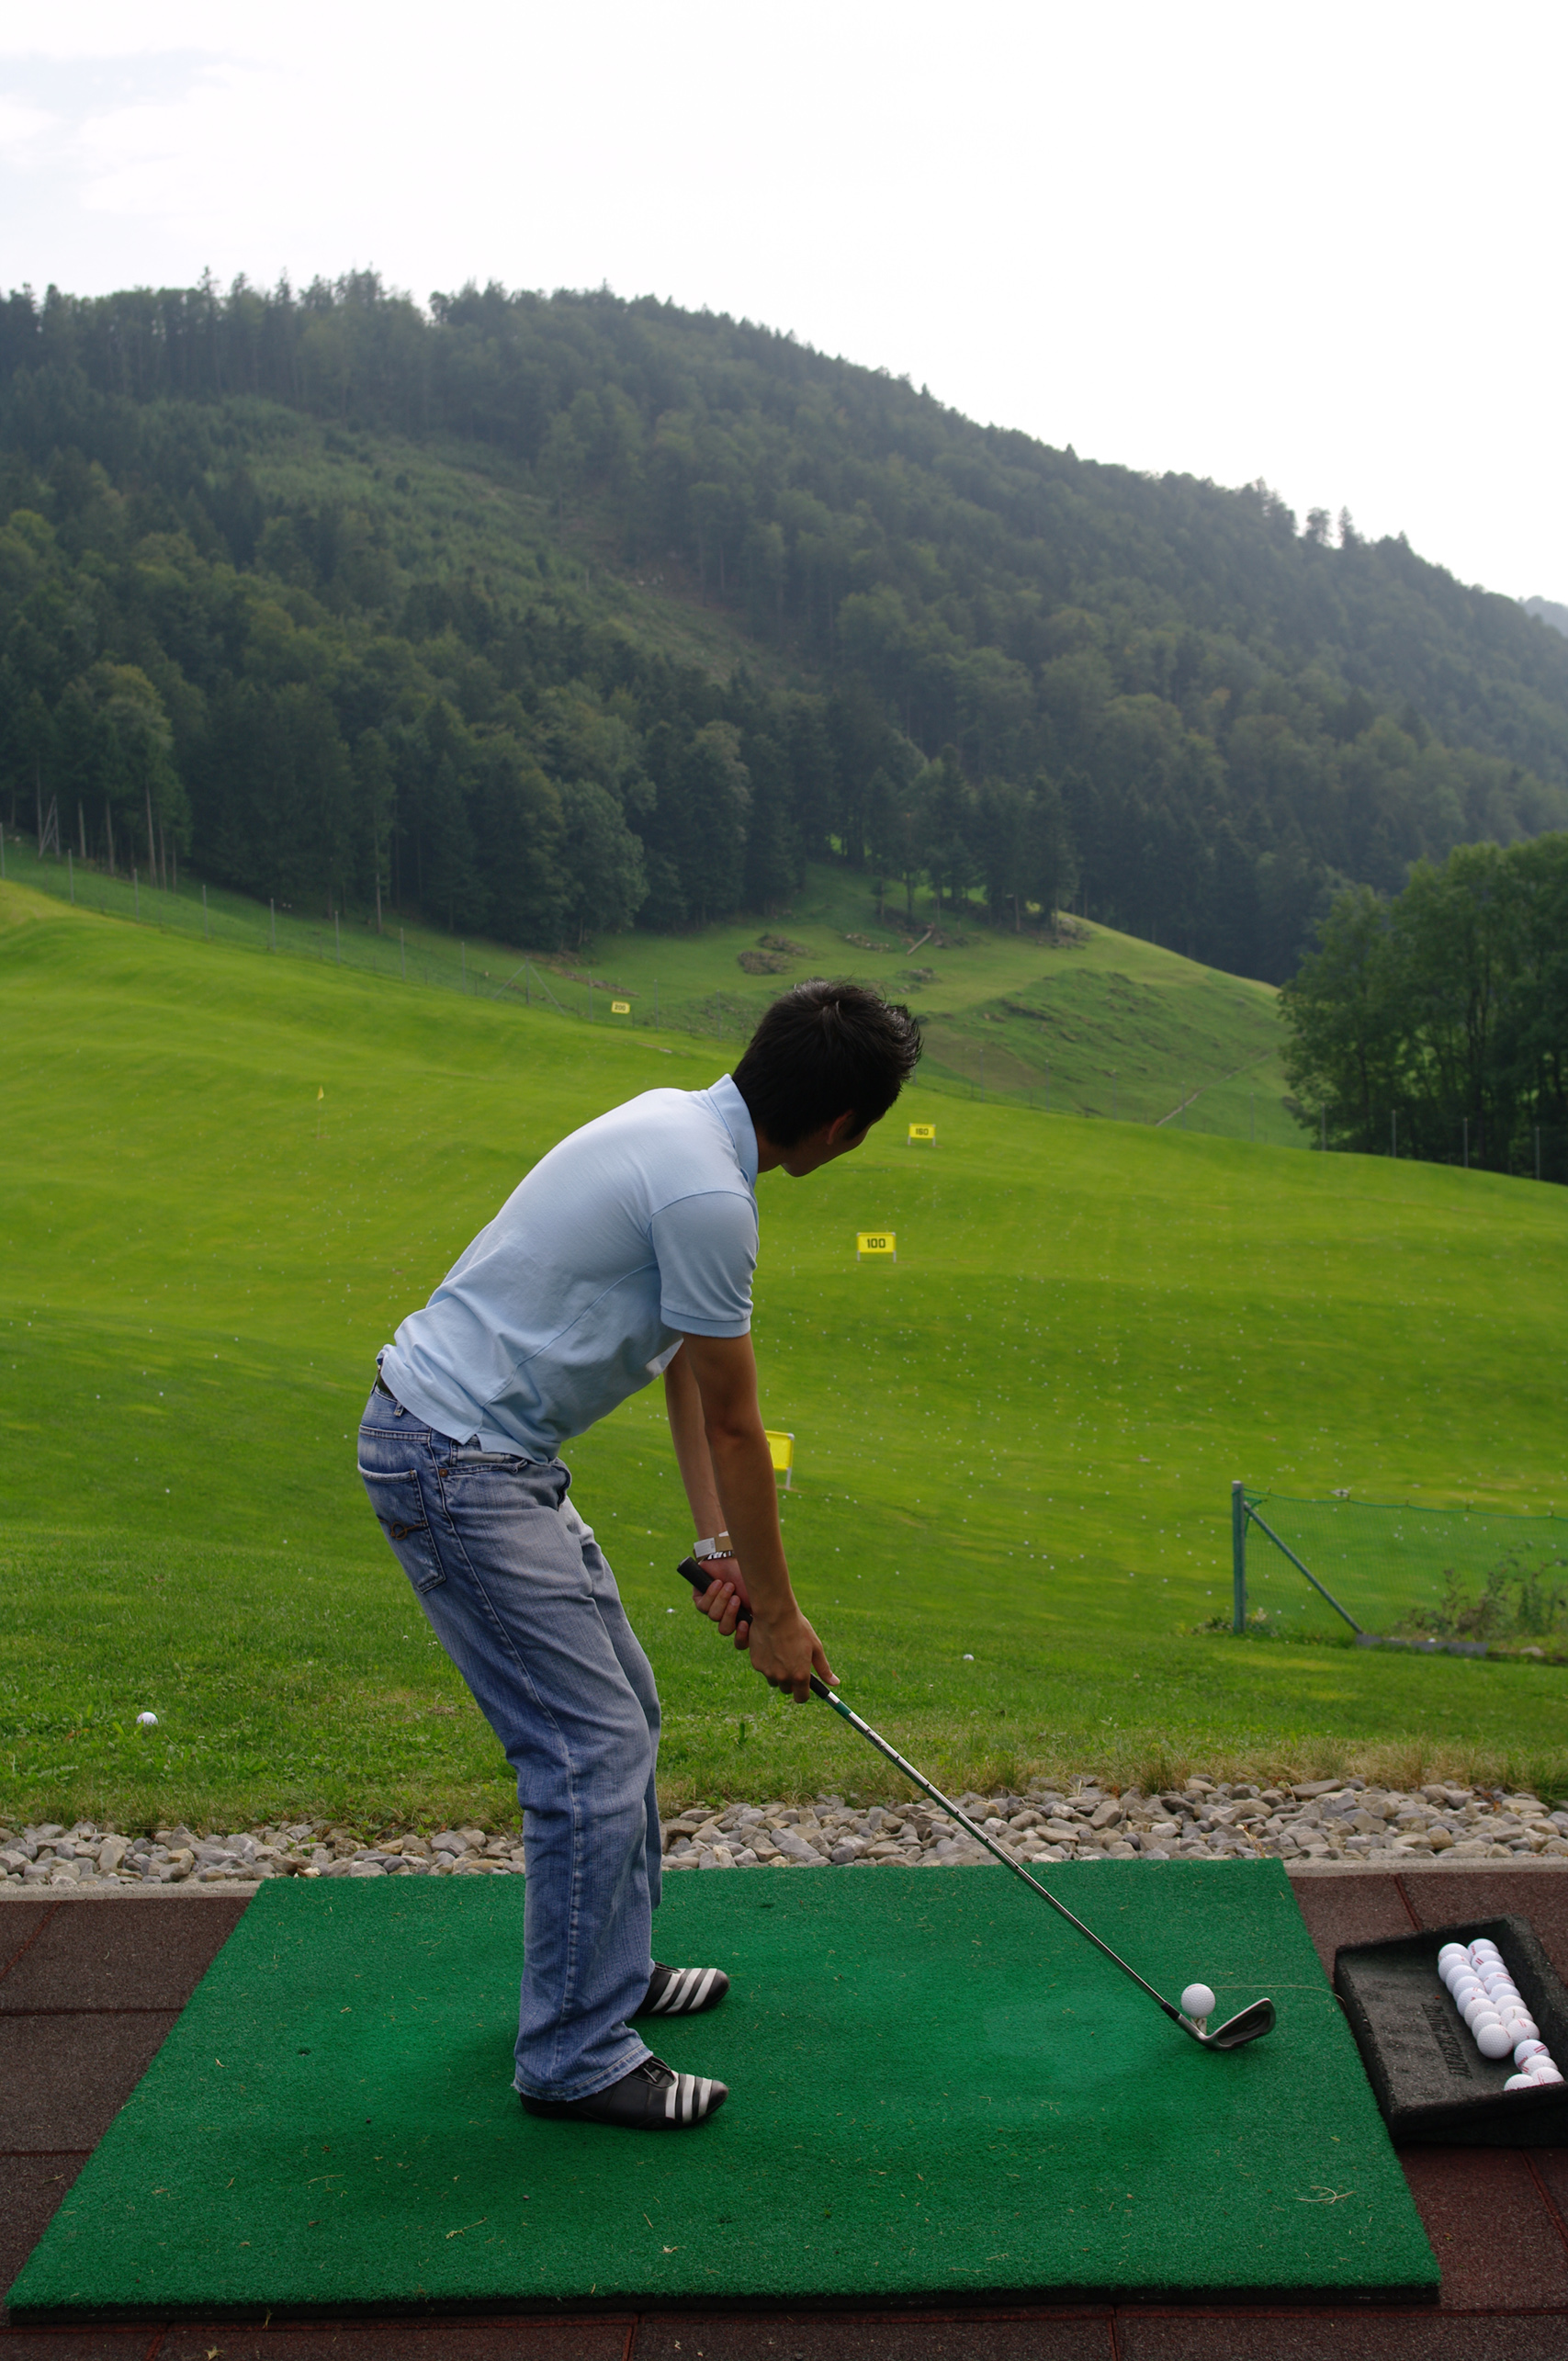 Practicing golf photo